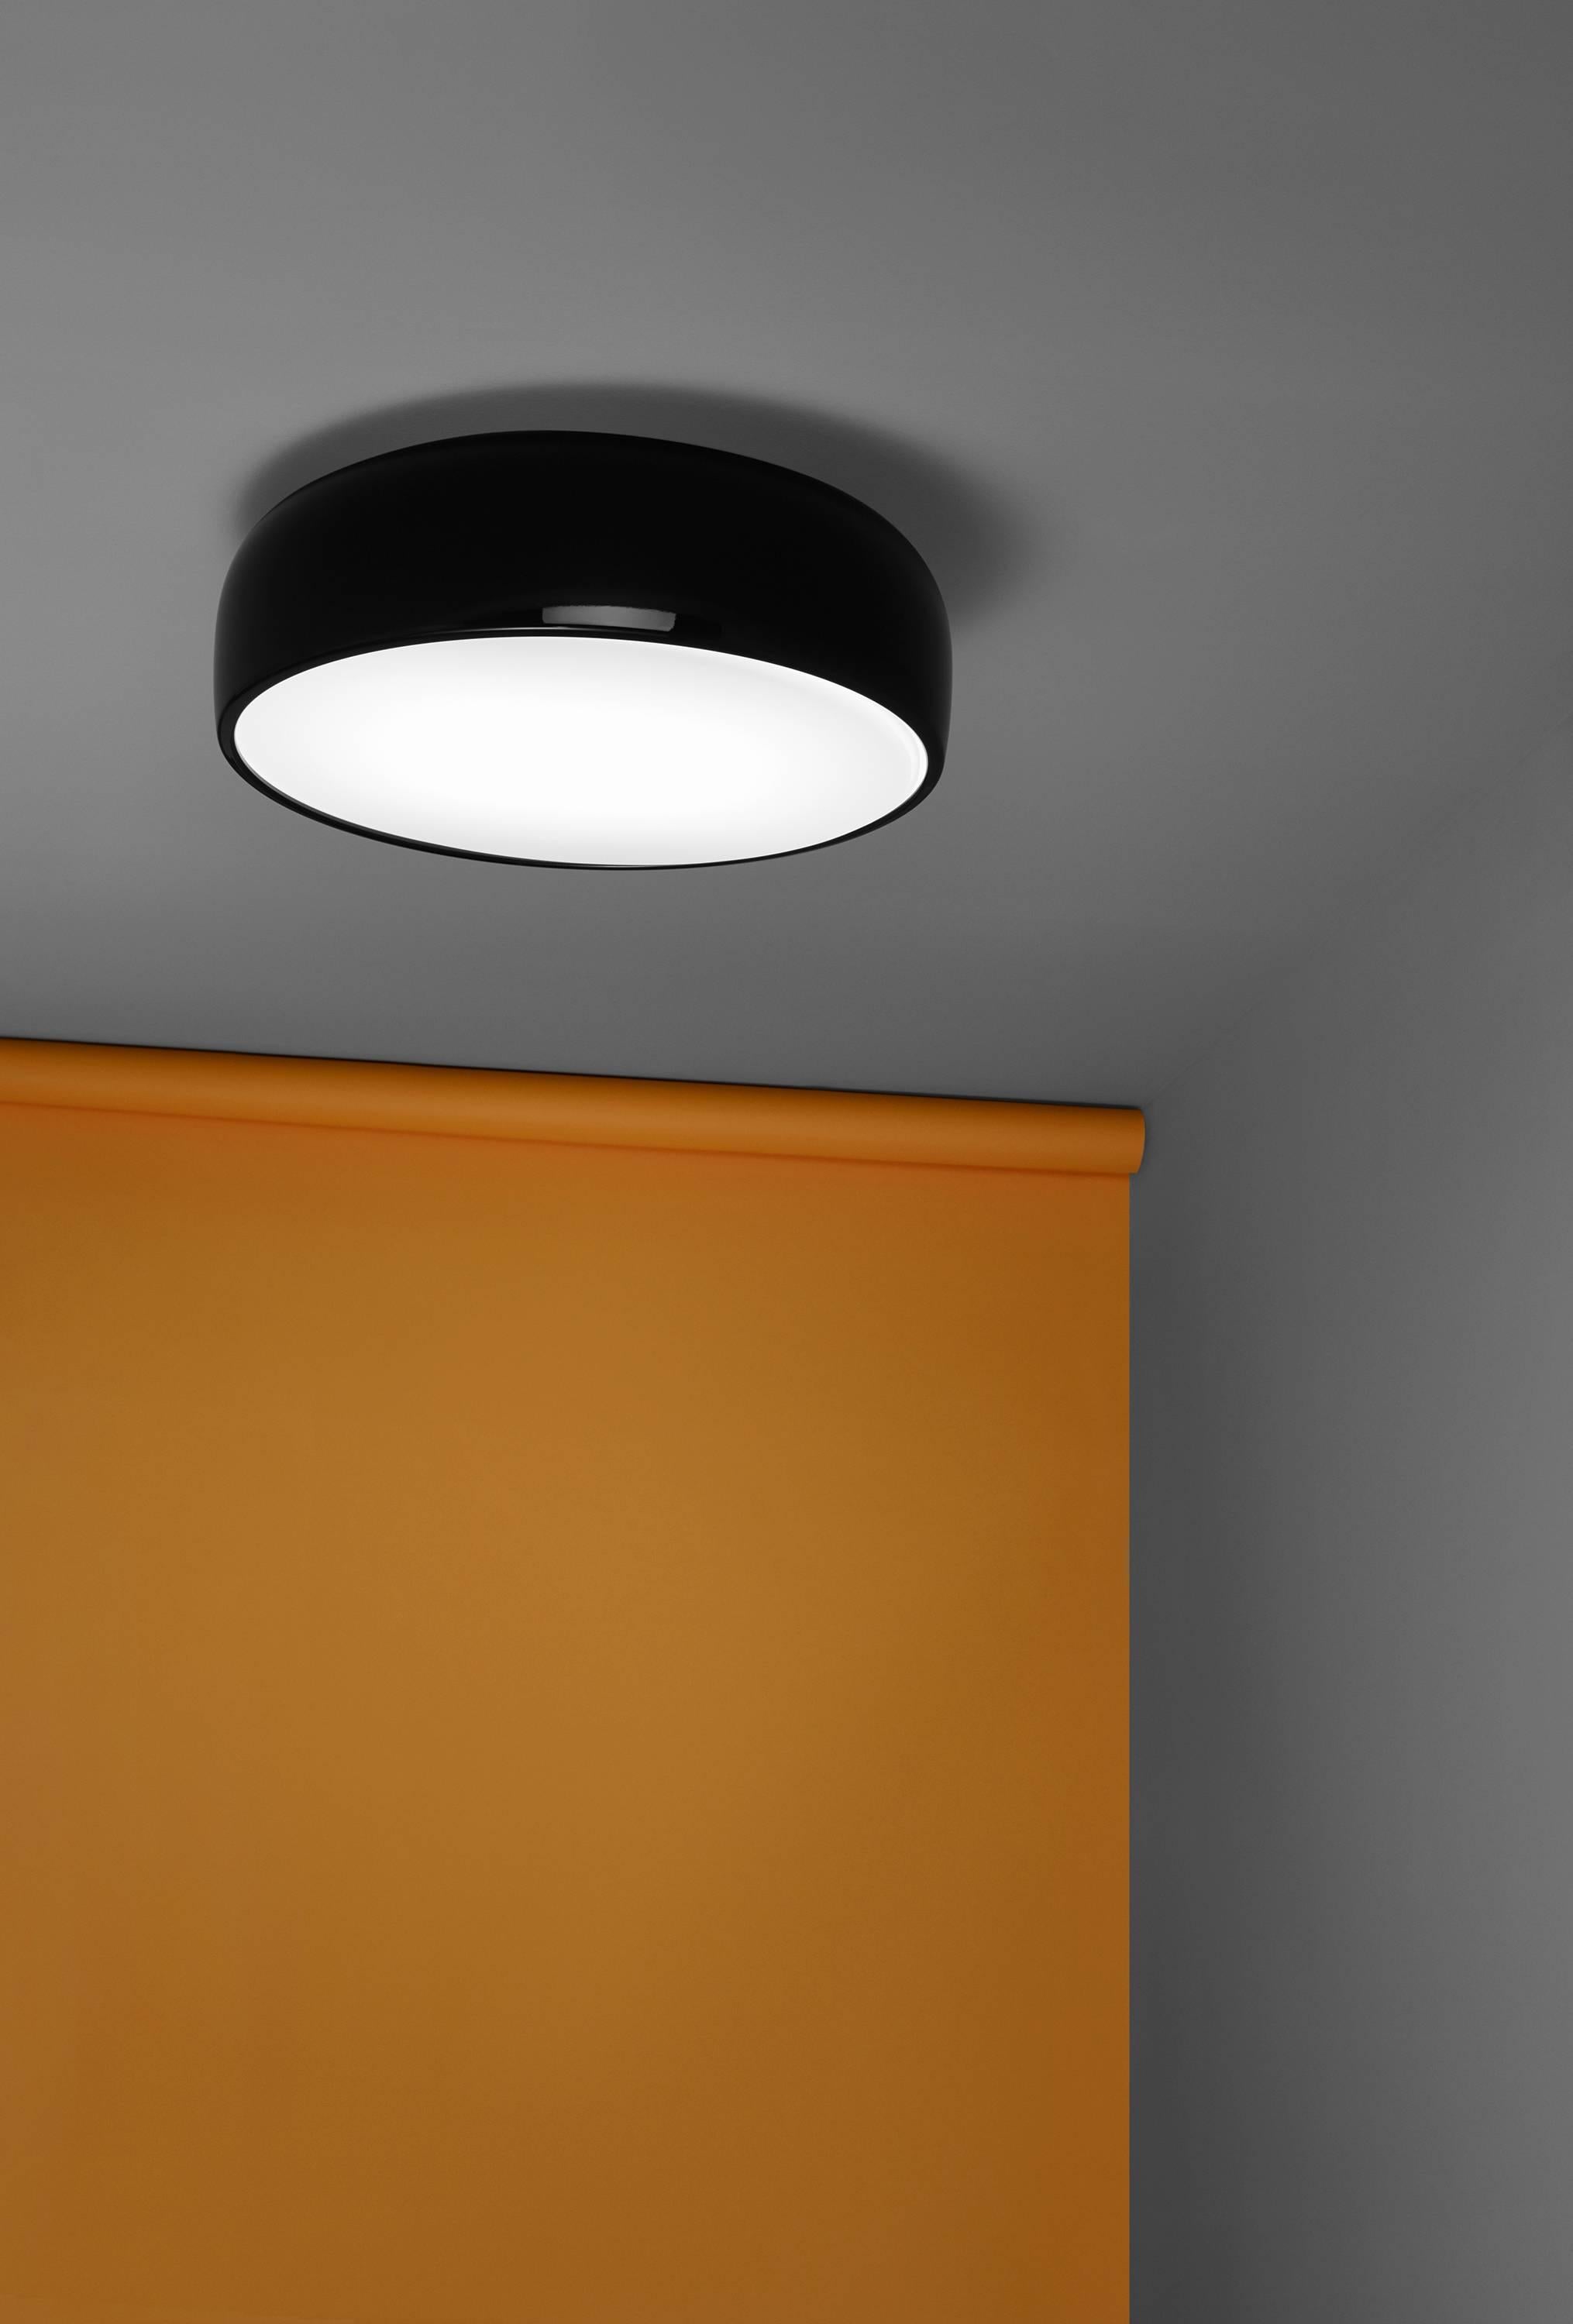 flos smithfield ceiling light